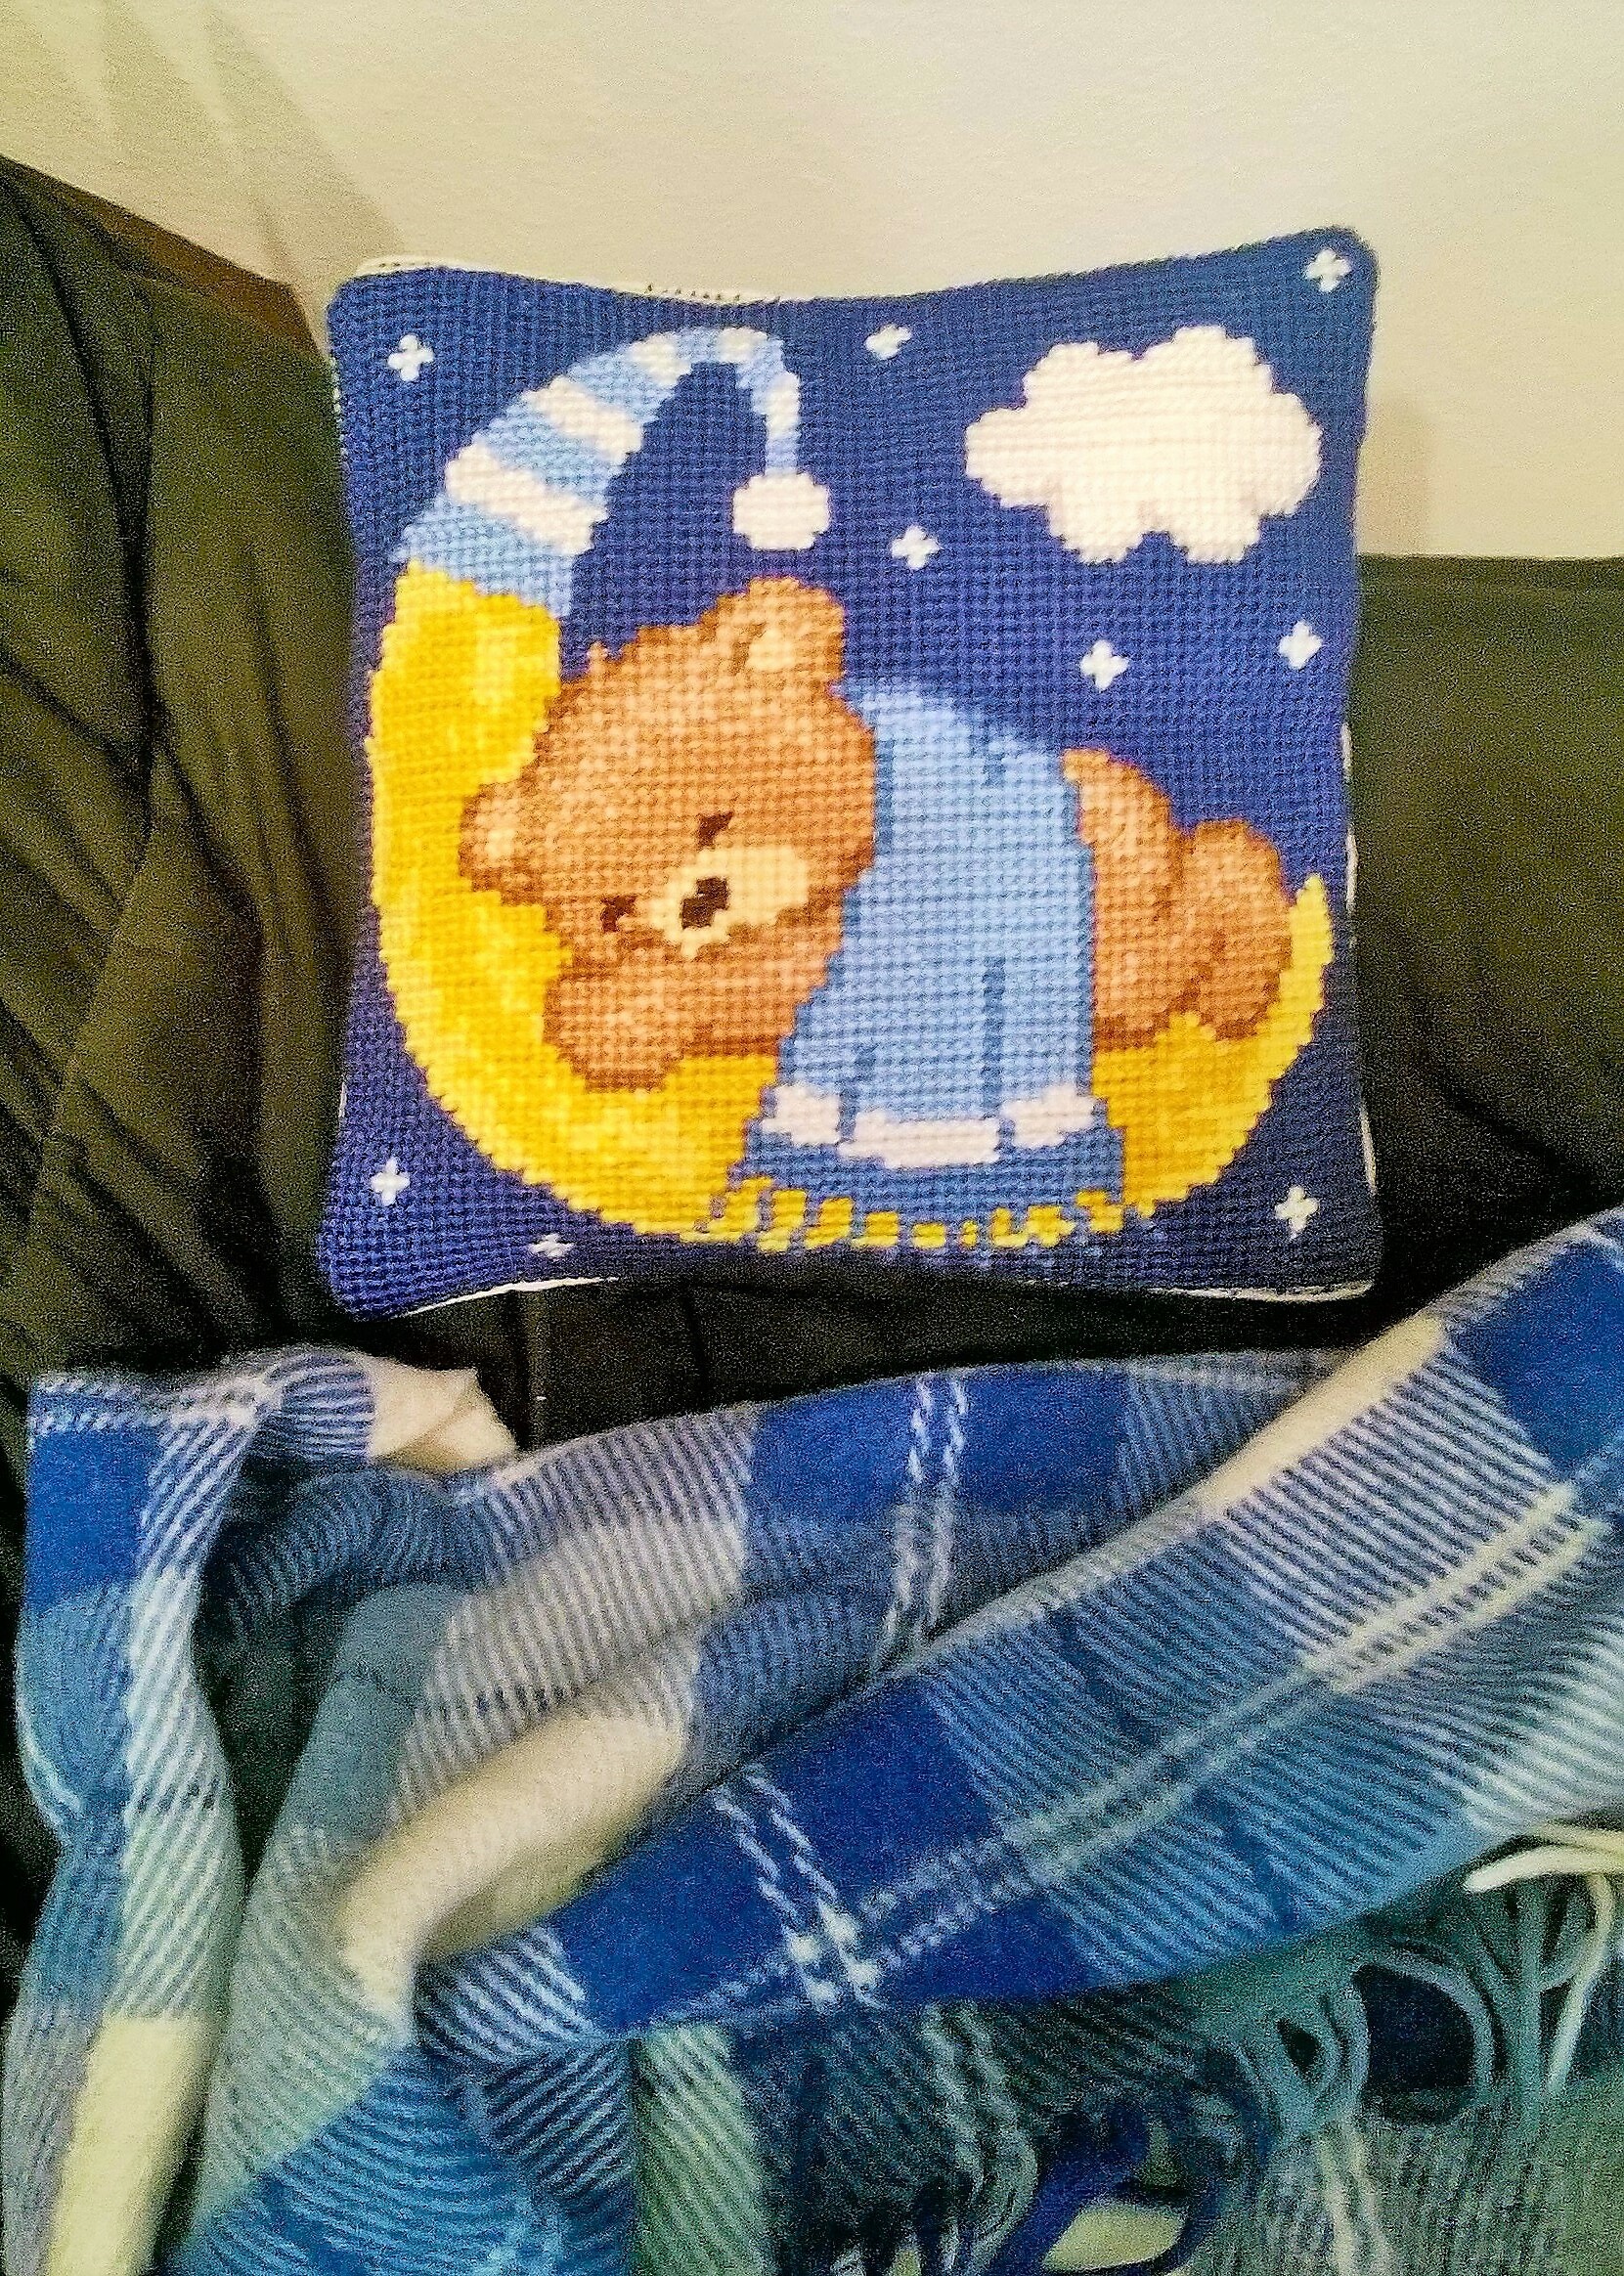 Teddy on a moon pillow case handcraft present boy child room 